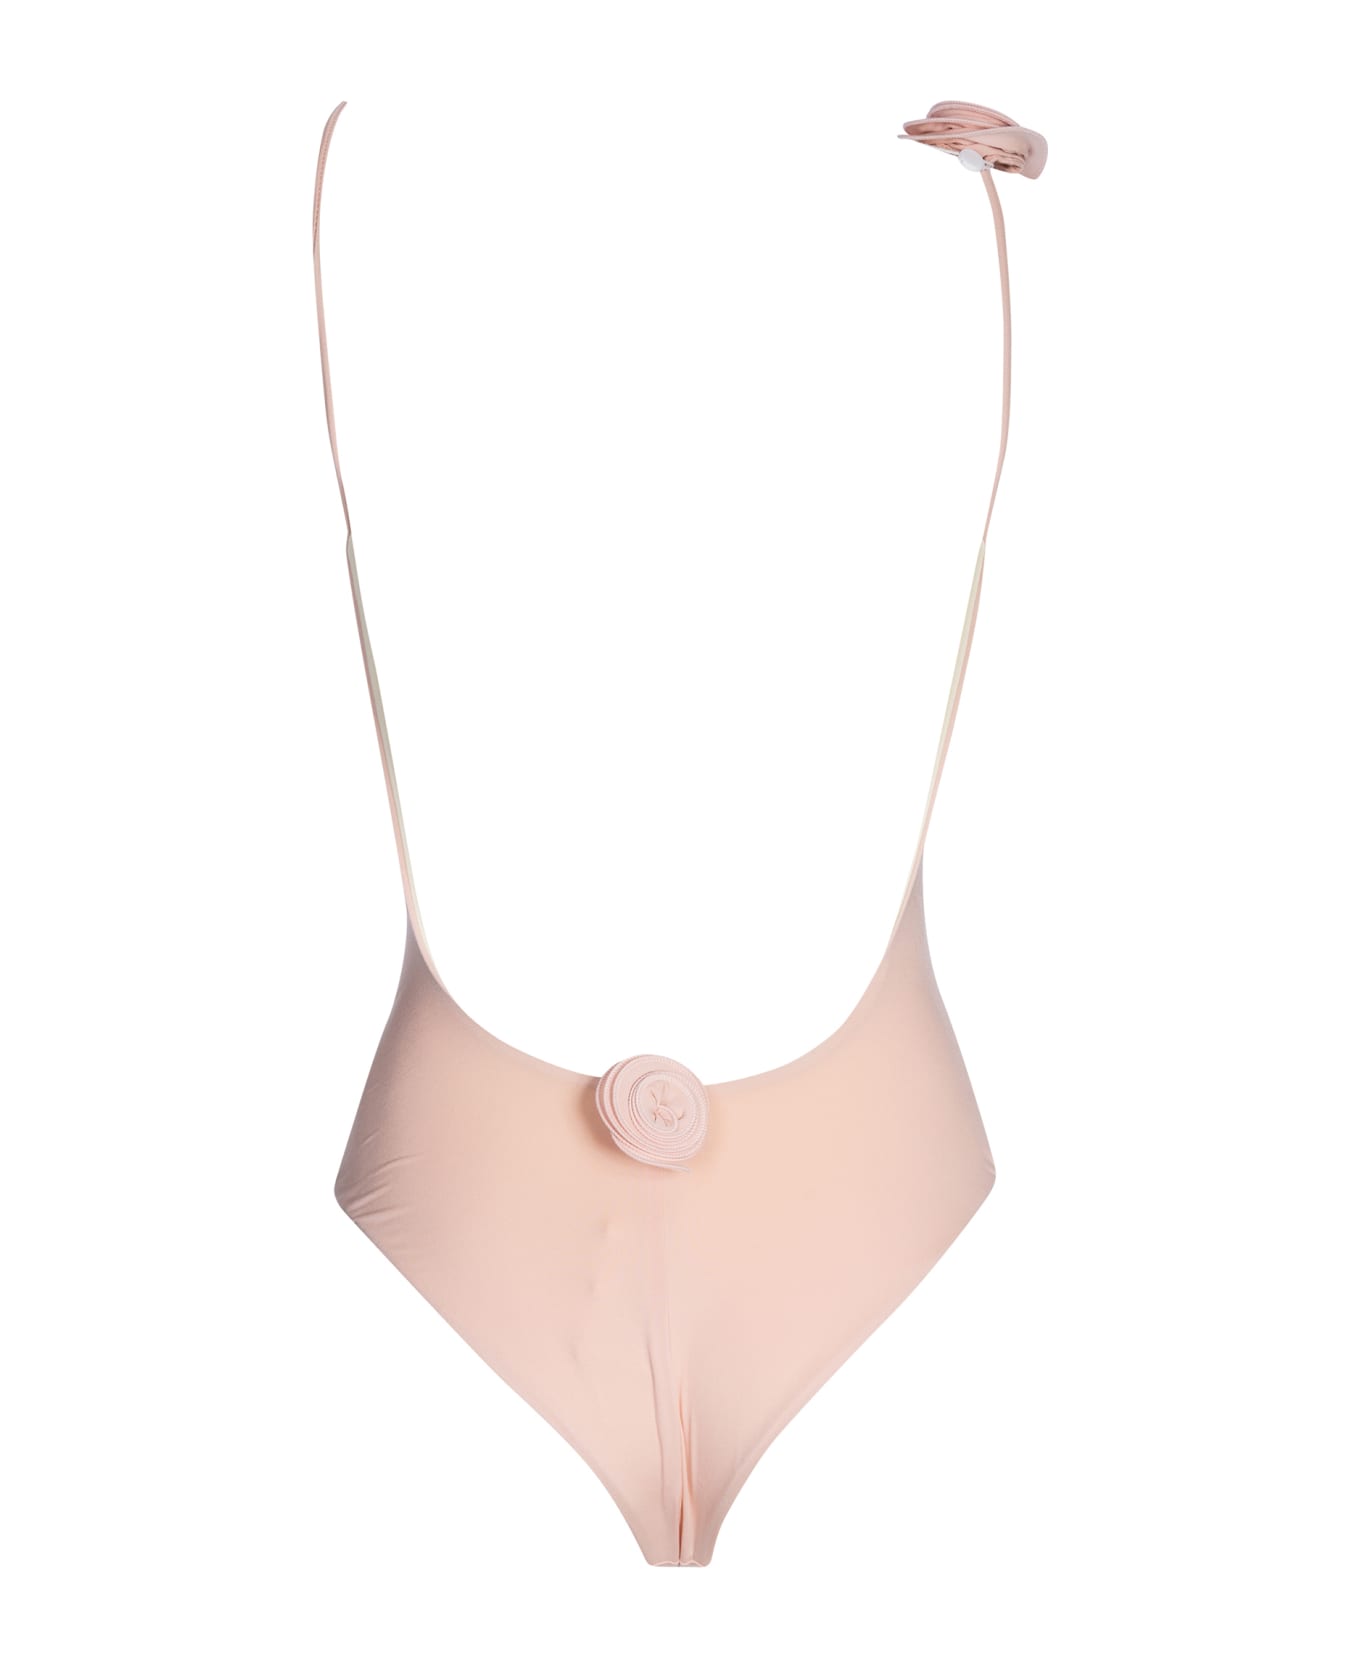 La Reveche Ashar One-piece Bikini - Quartz Rose